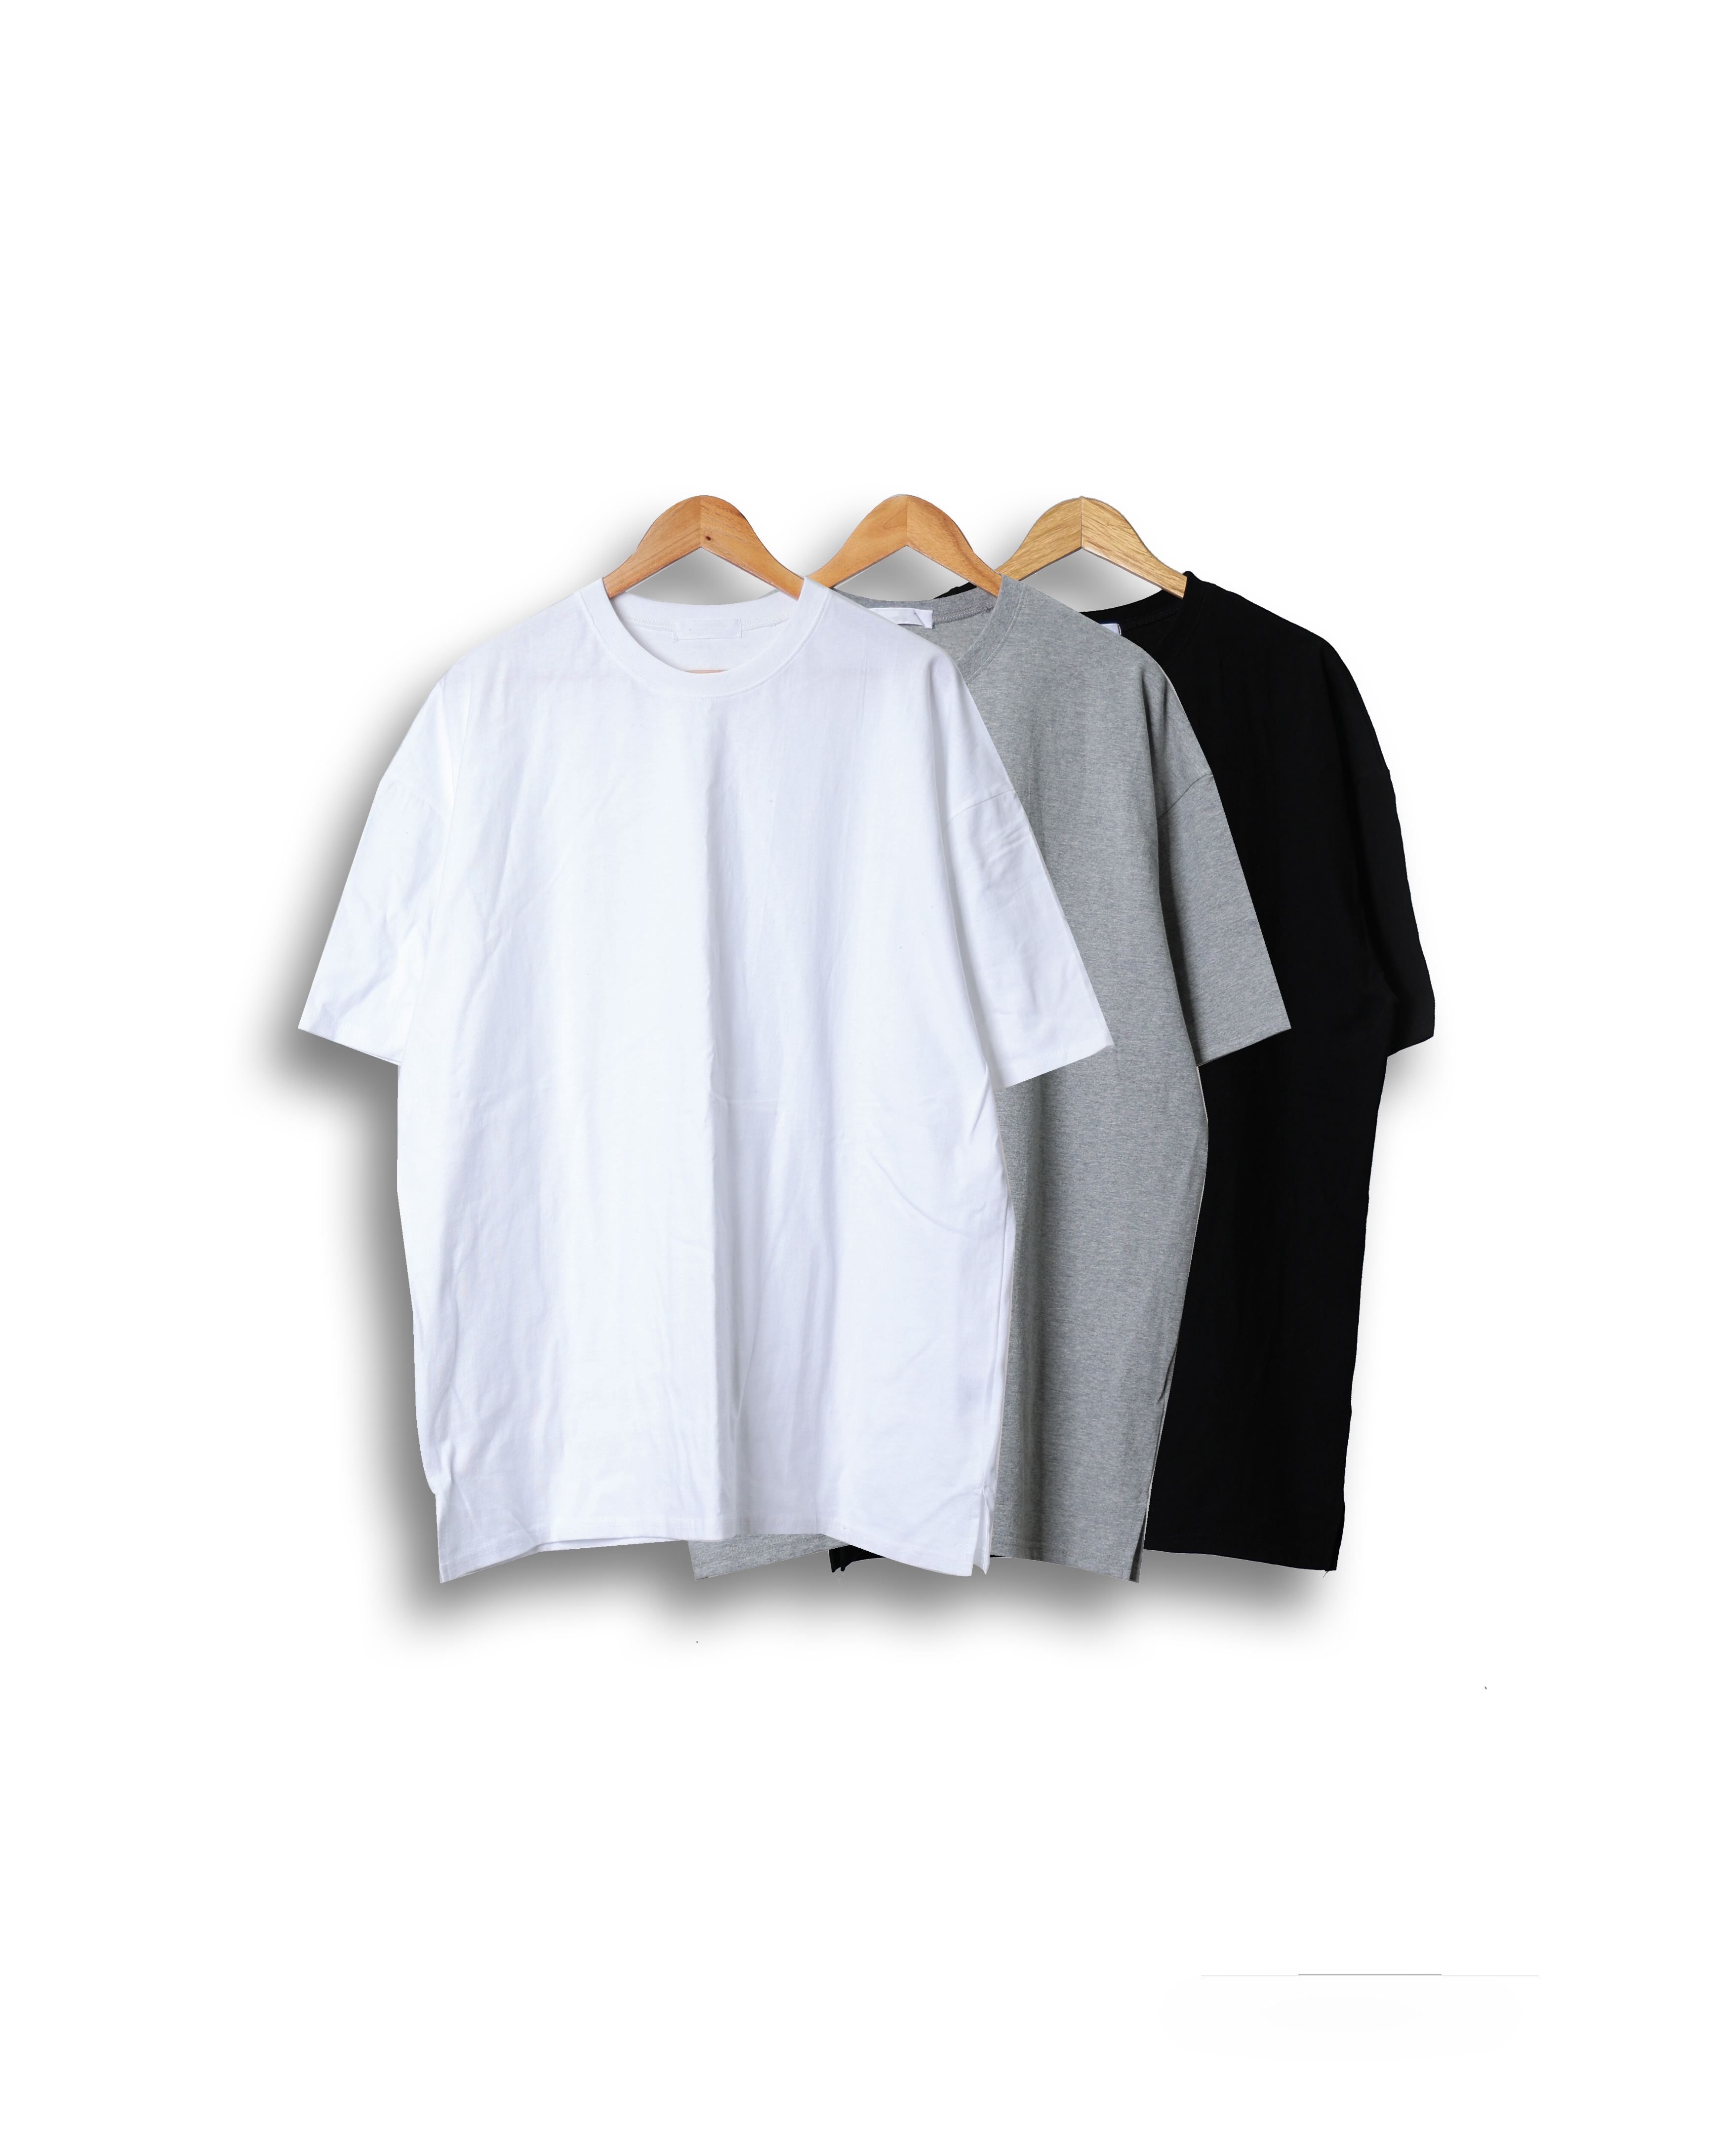 CRECENT Layered Basic Over T Shirts (Black/Gray/White)